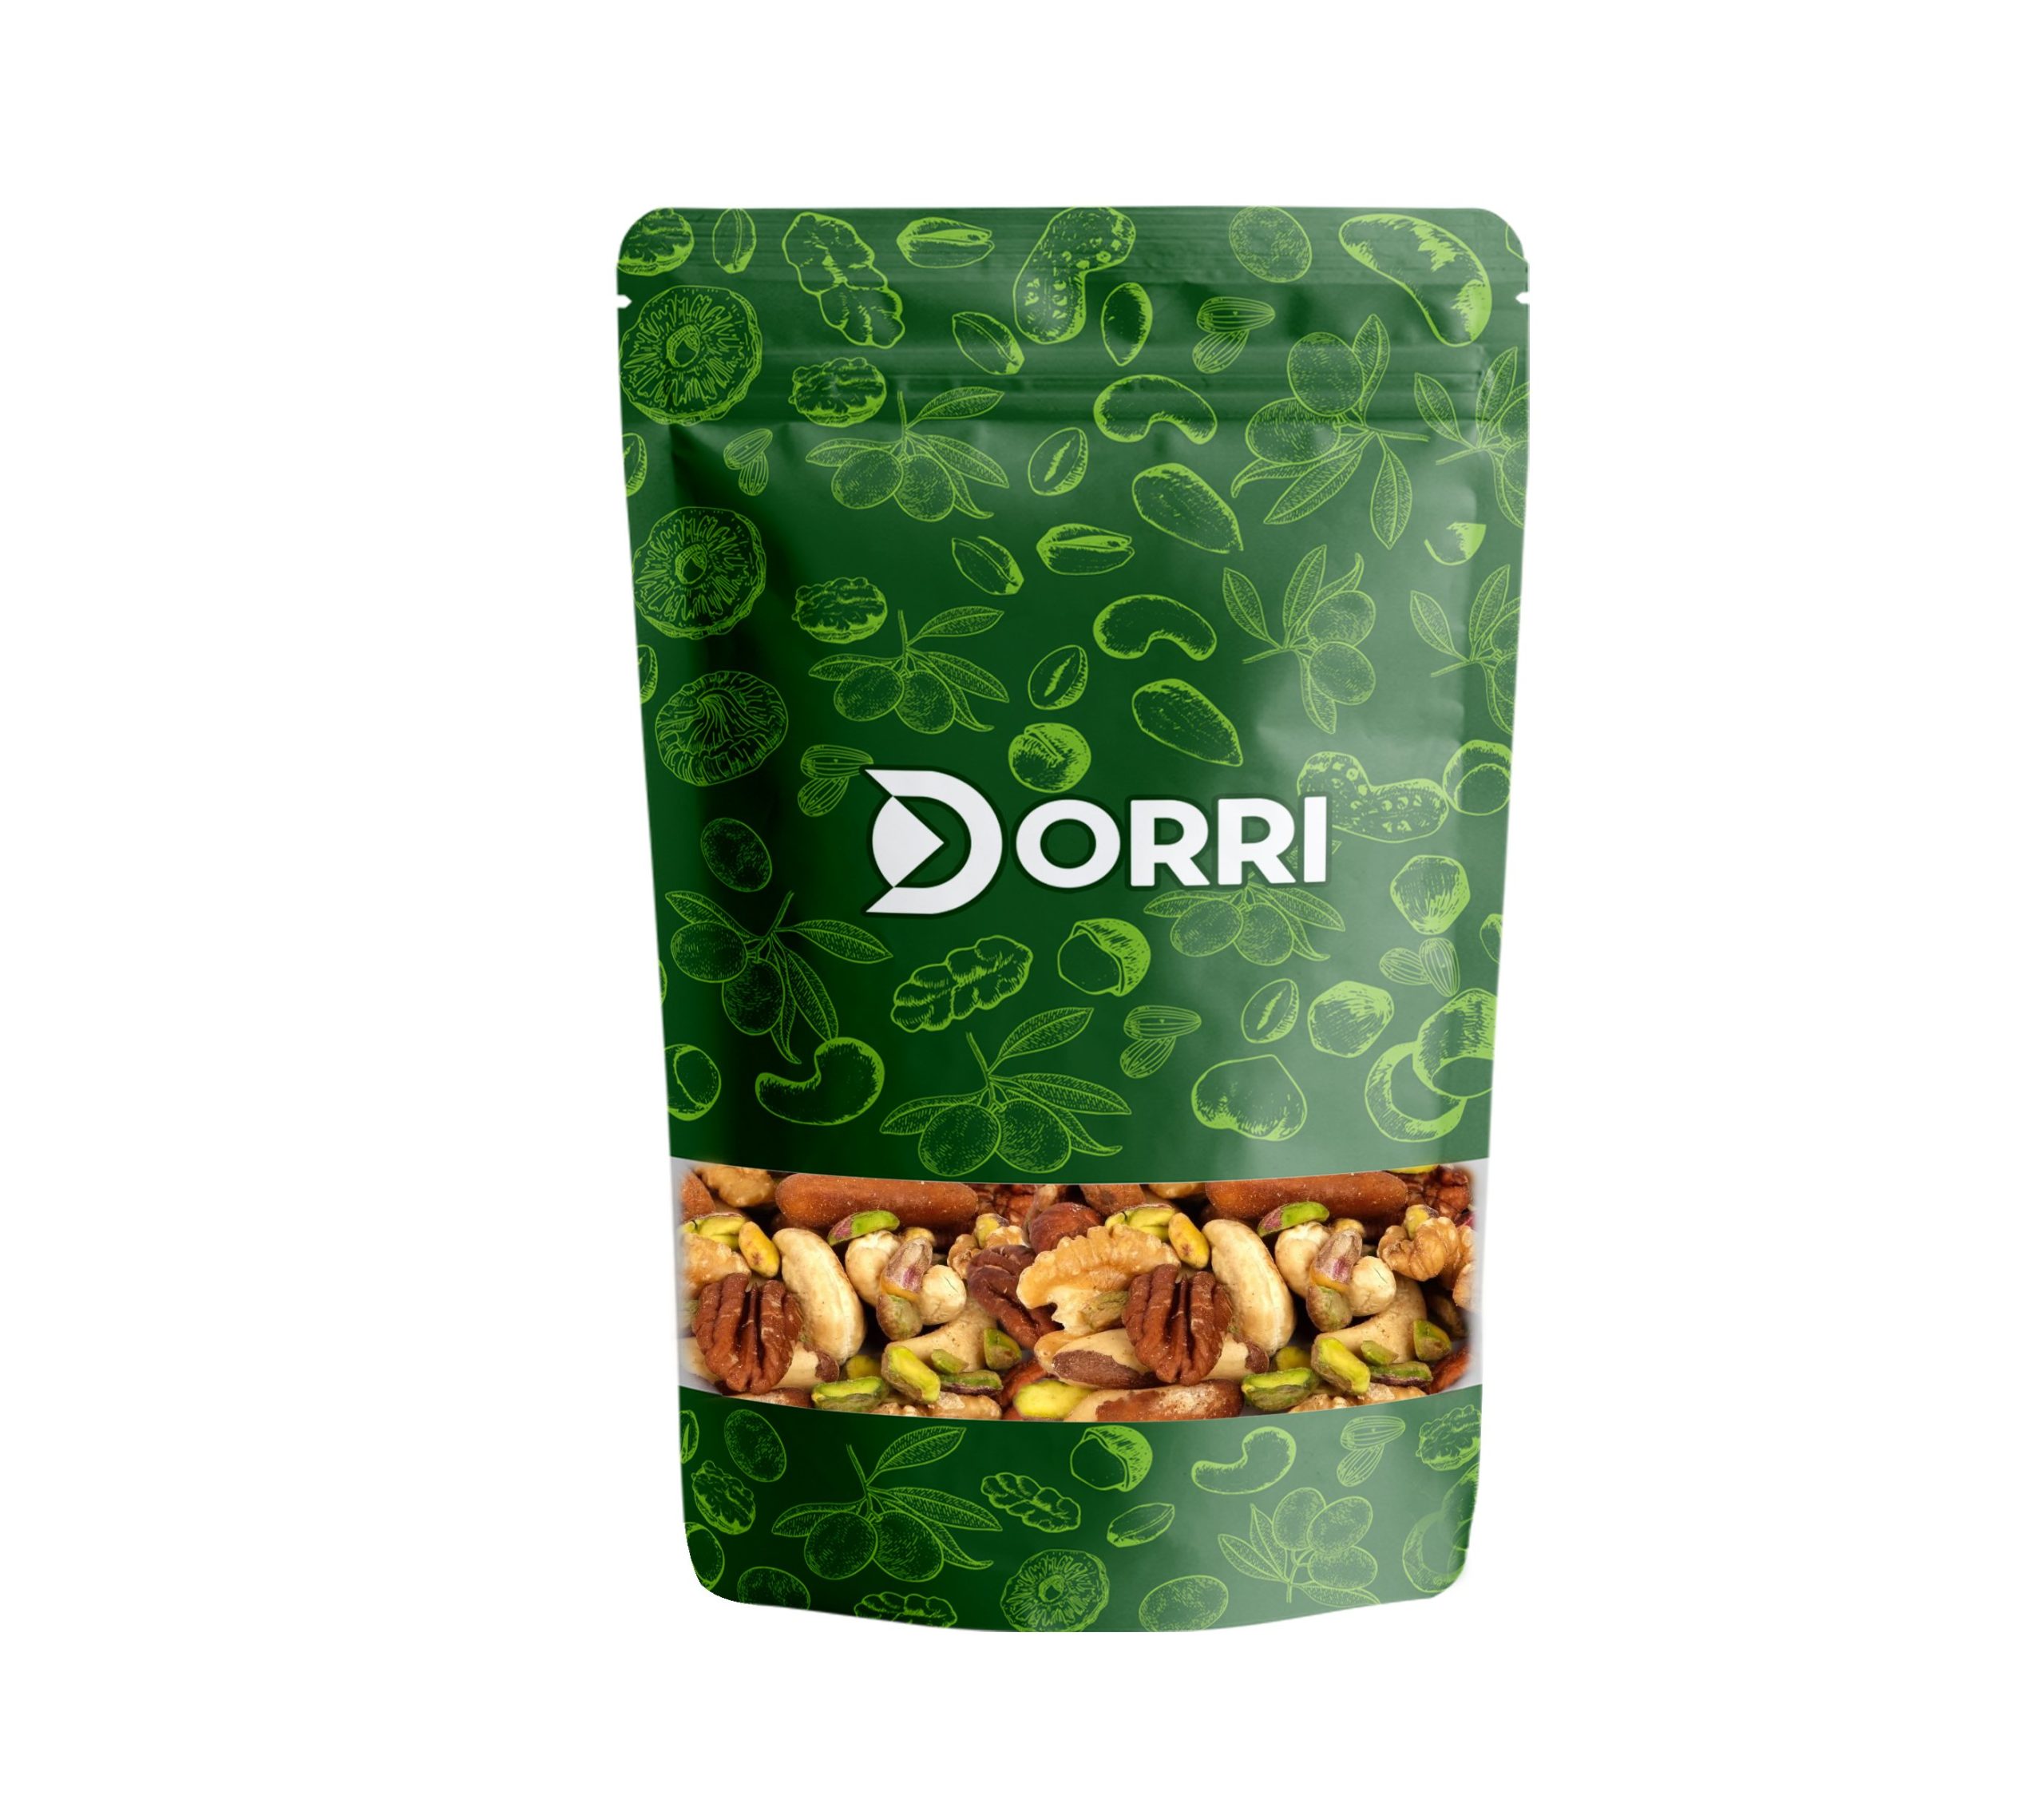 Dorri - Raw Mixed Nuts